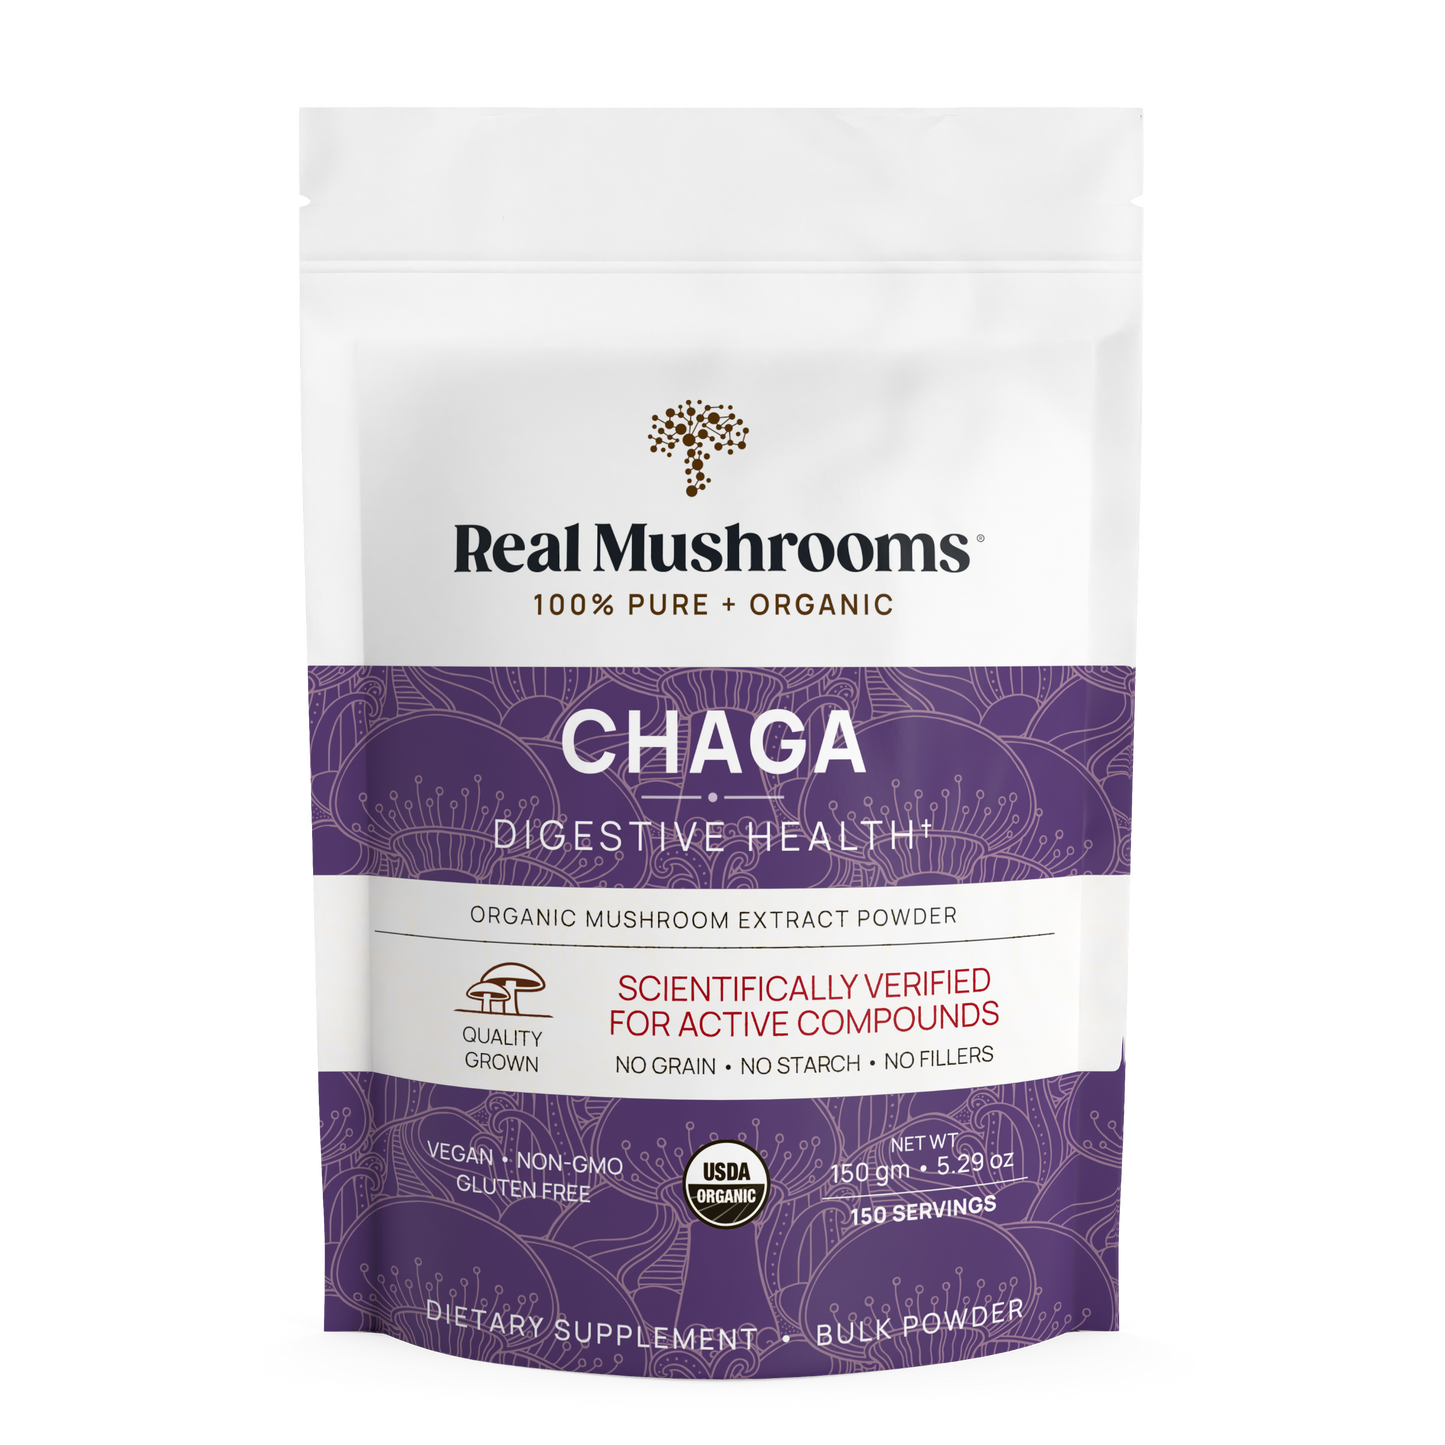 Real Mushrooms Organic Chaga Extract Powder enhances digestive health.